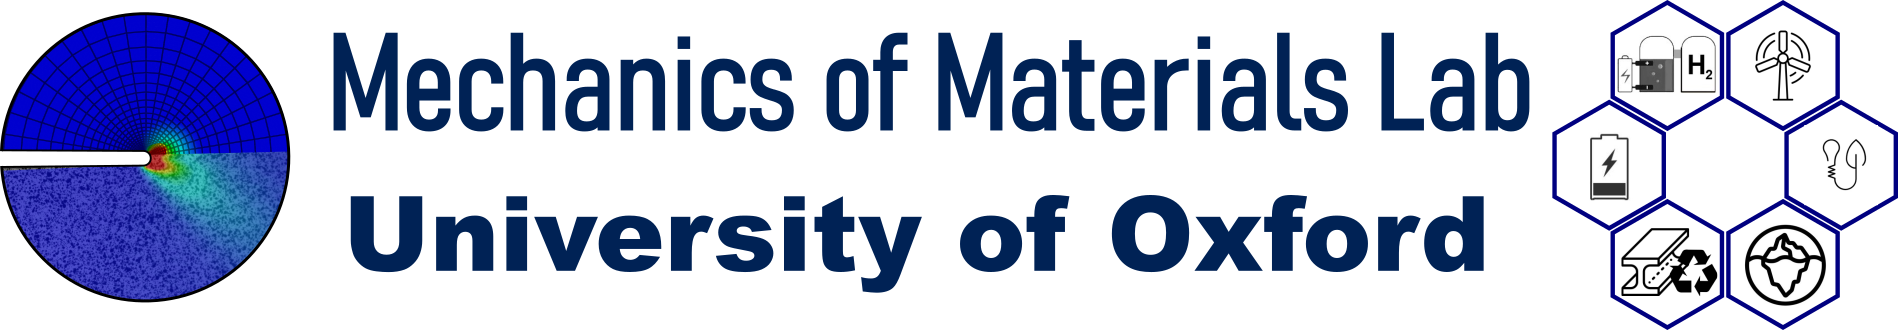 Logo - Mechanics of Materials Lab. University of Oxford